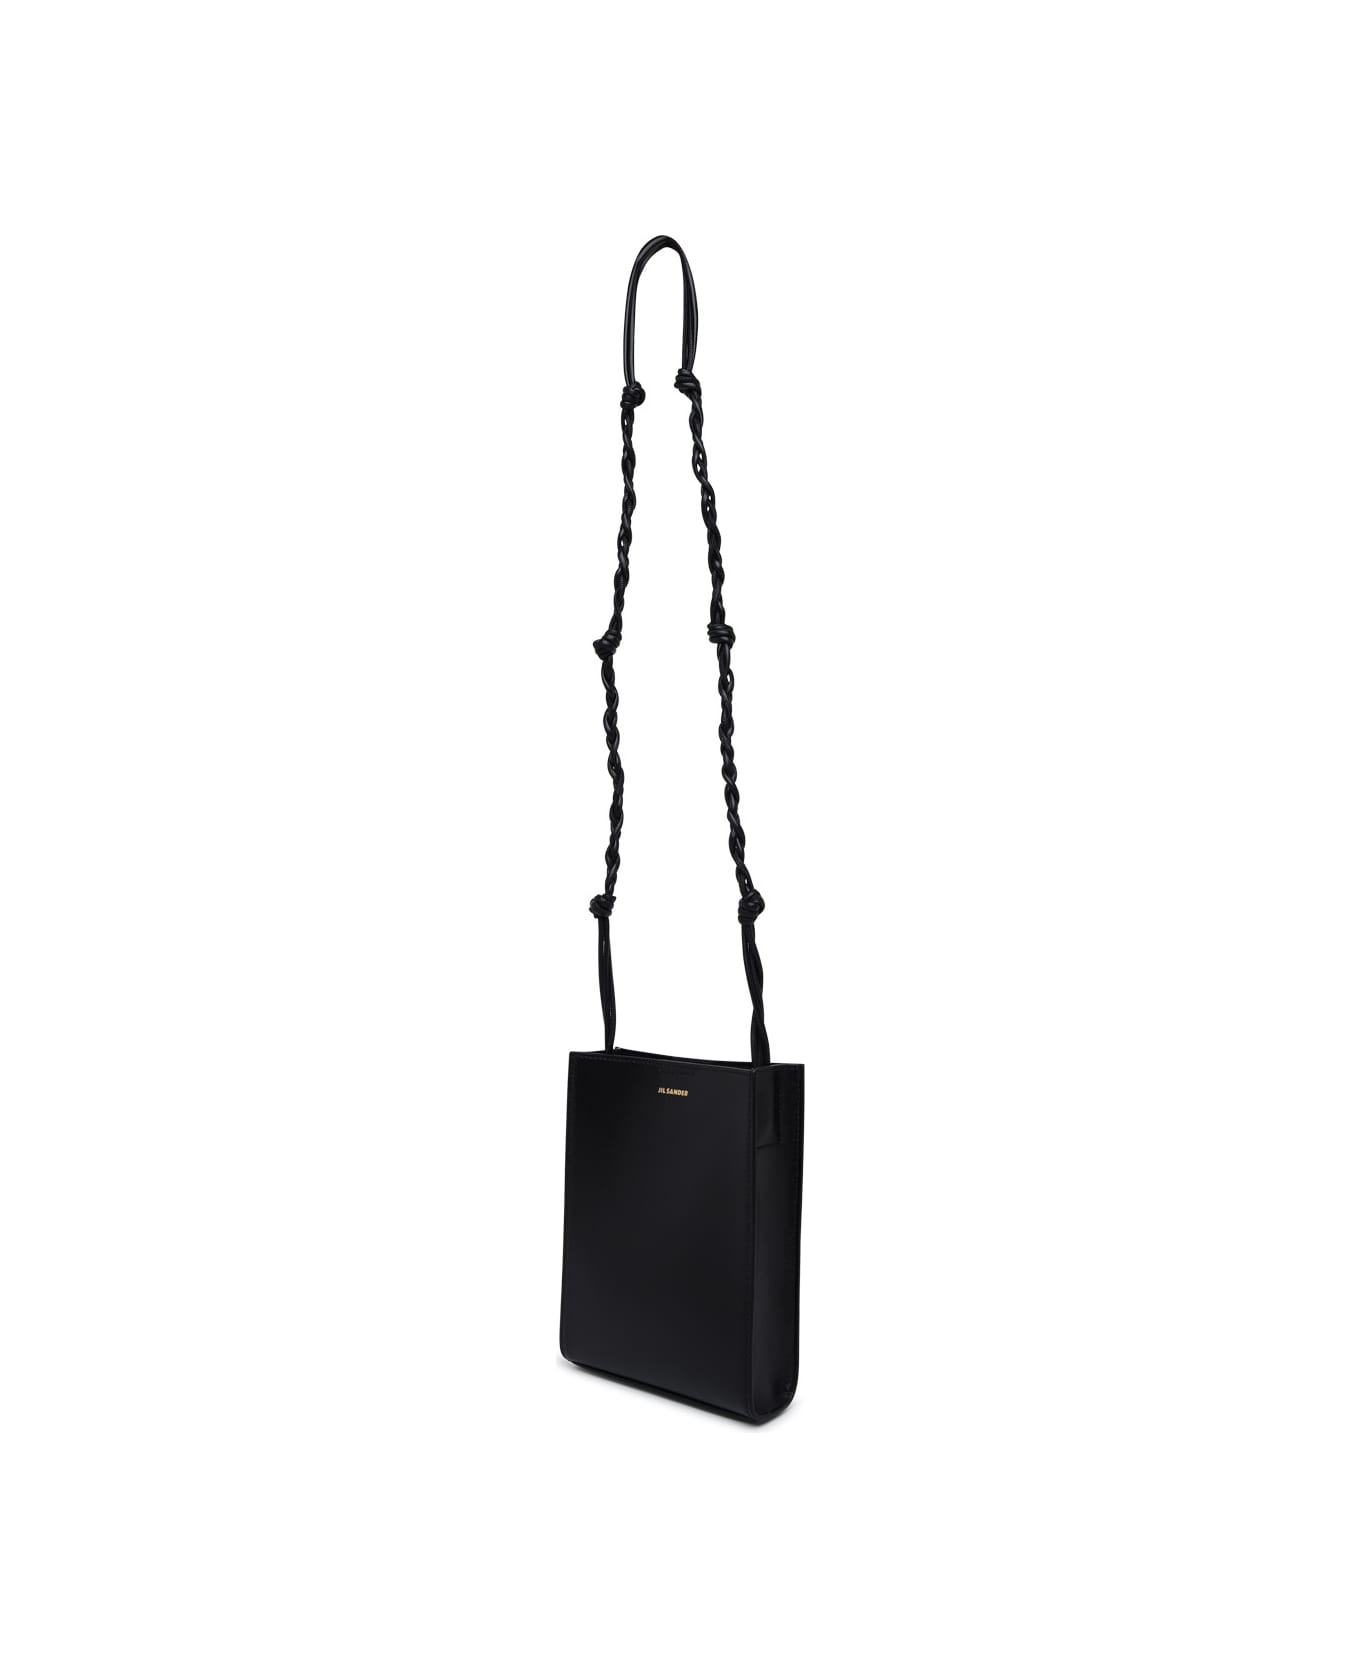 Jil Sander Black Leather Small Tangle Crossbody Bag - Black